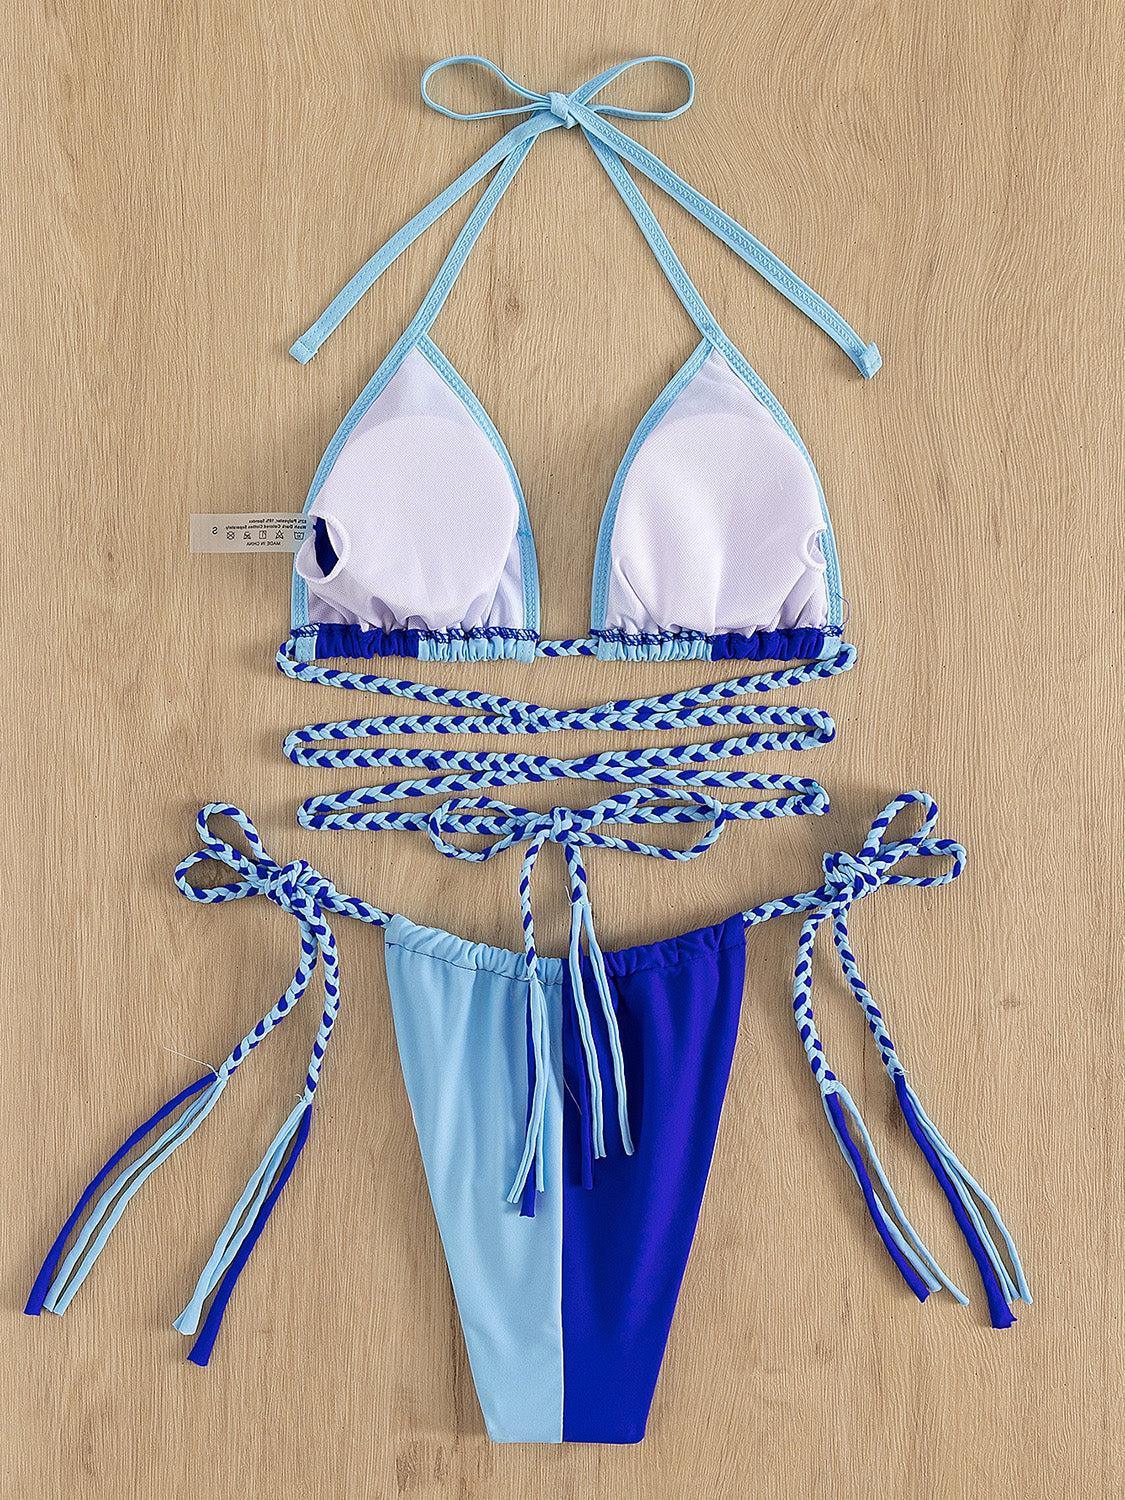 a blue and white bikini with a tie around it